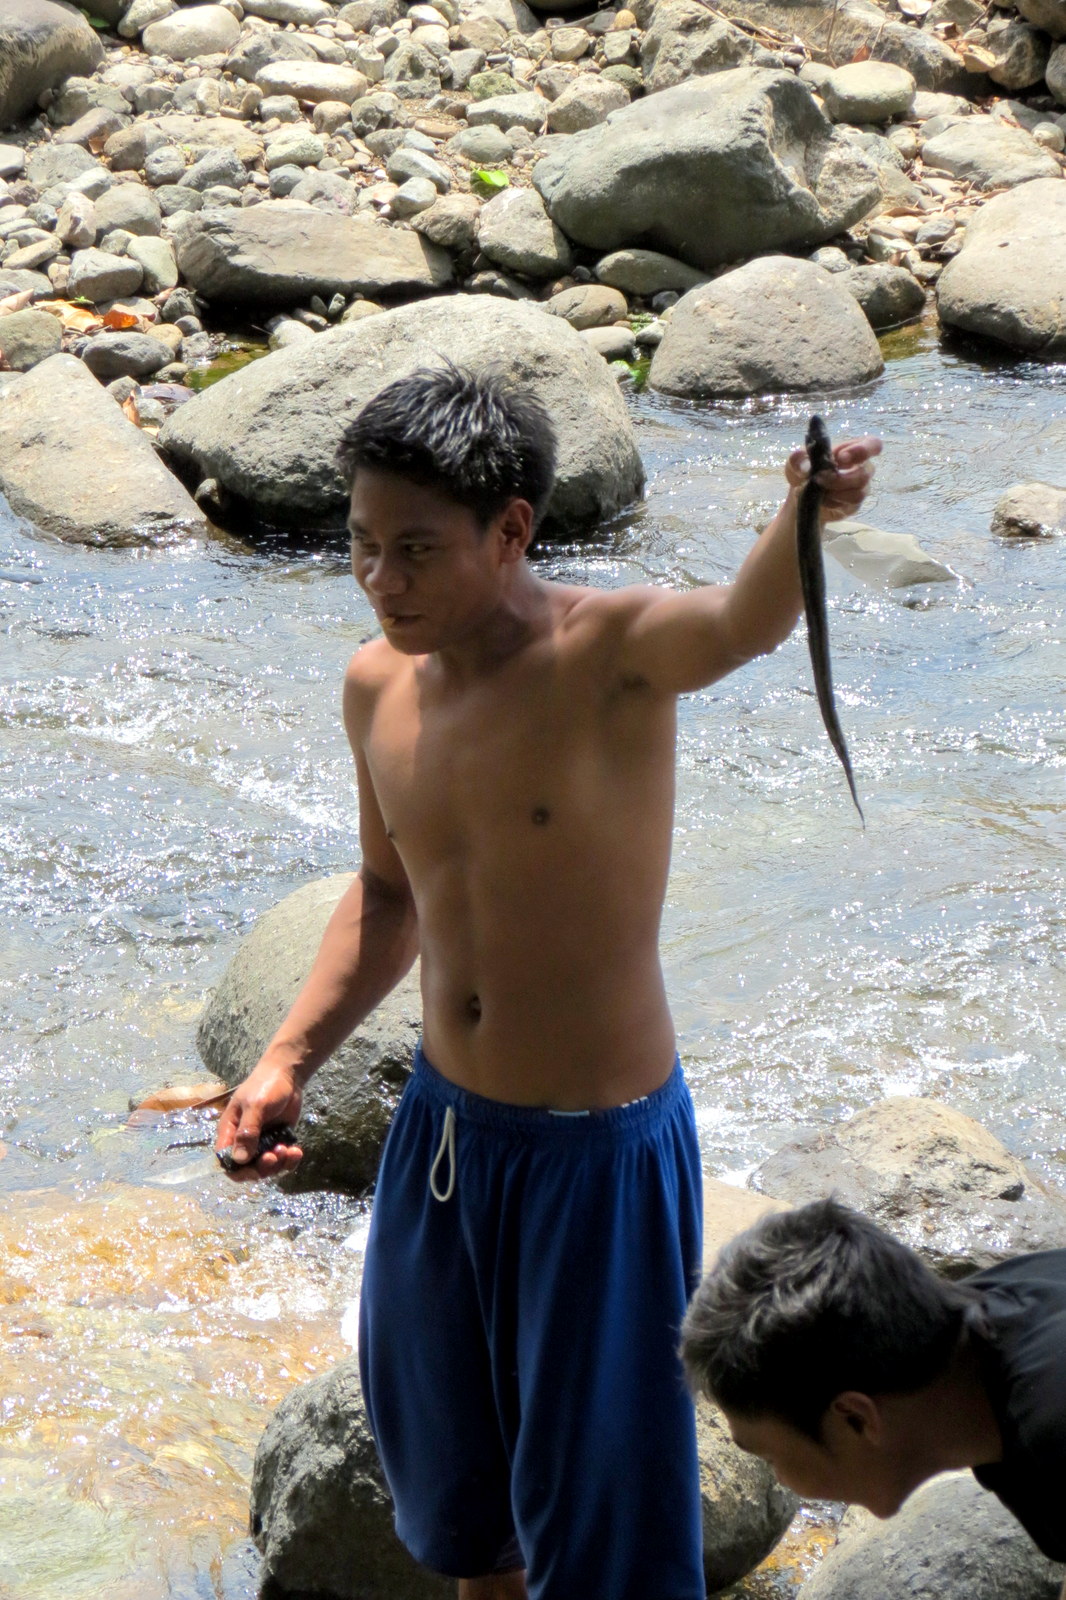 fisherman-catches-eel-in-stream-near-kabigan-falls